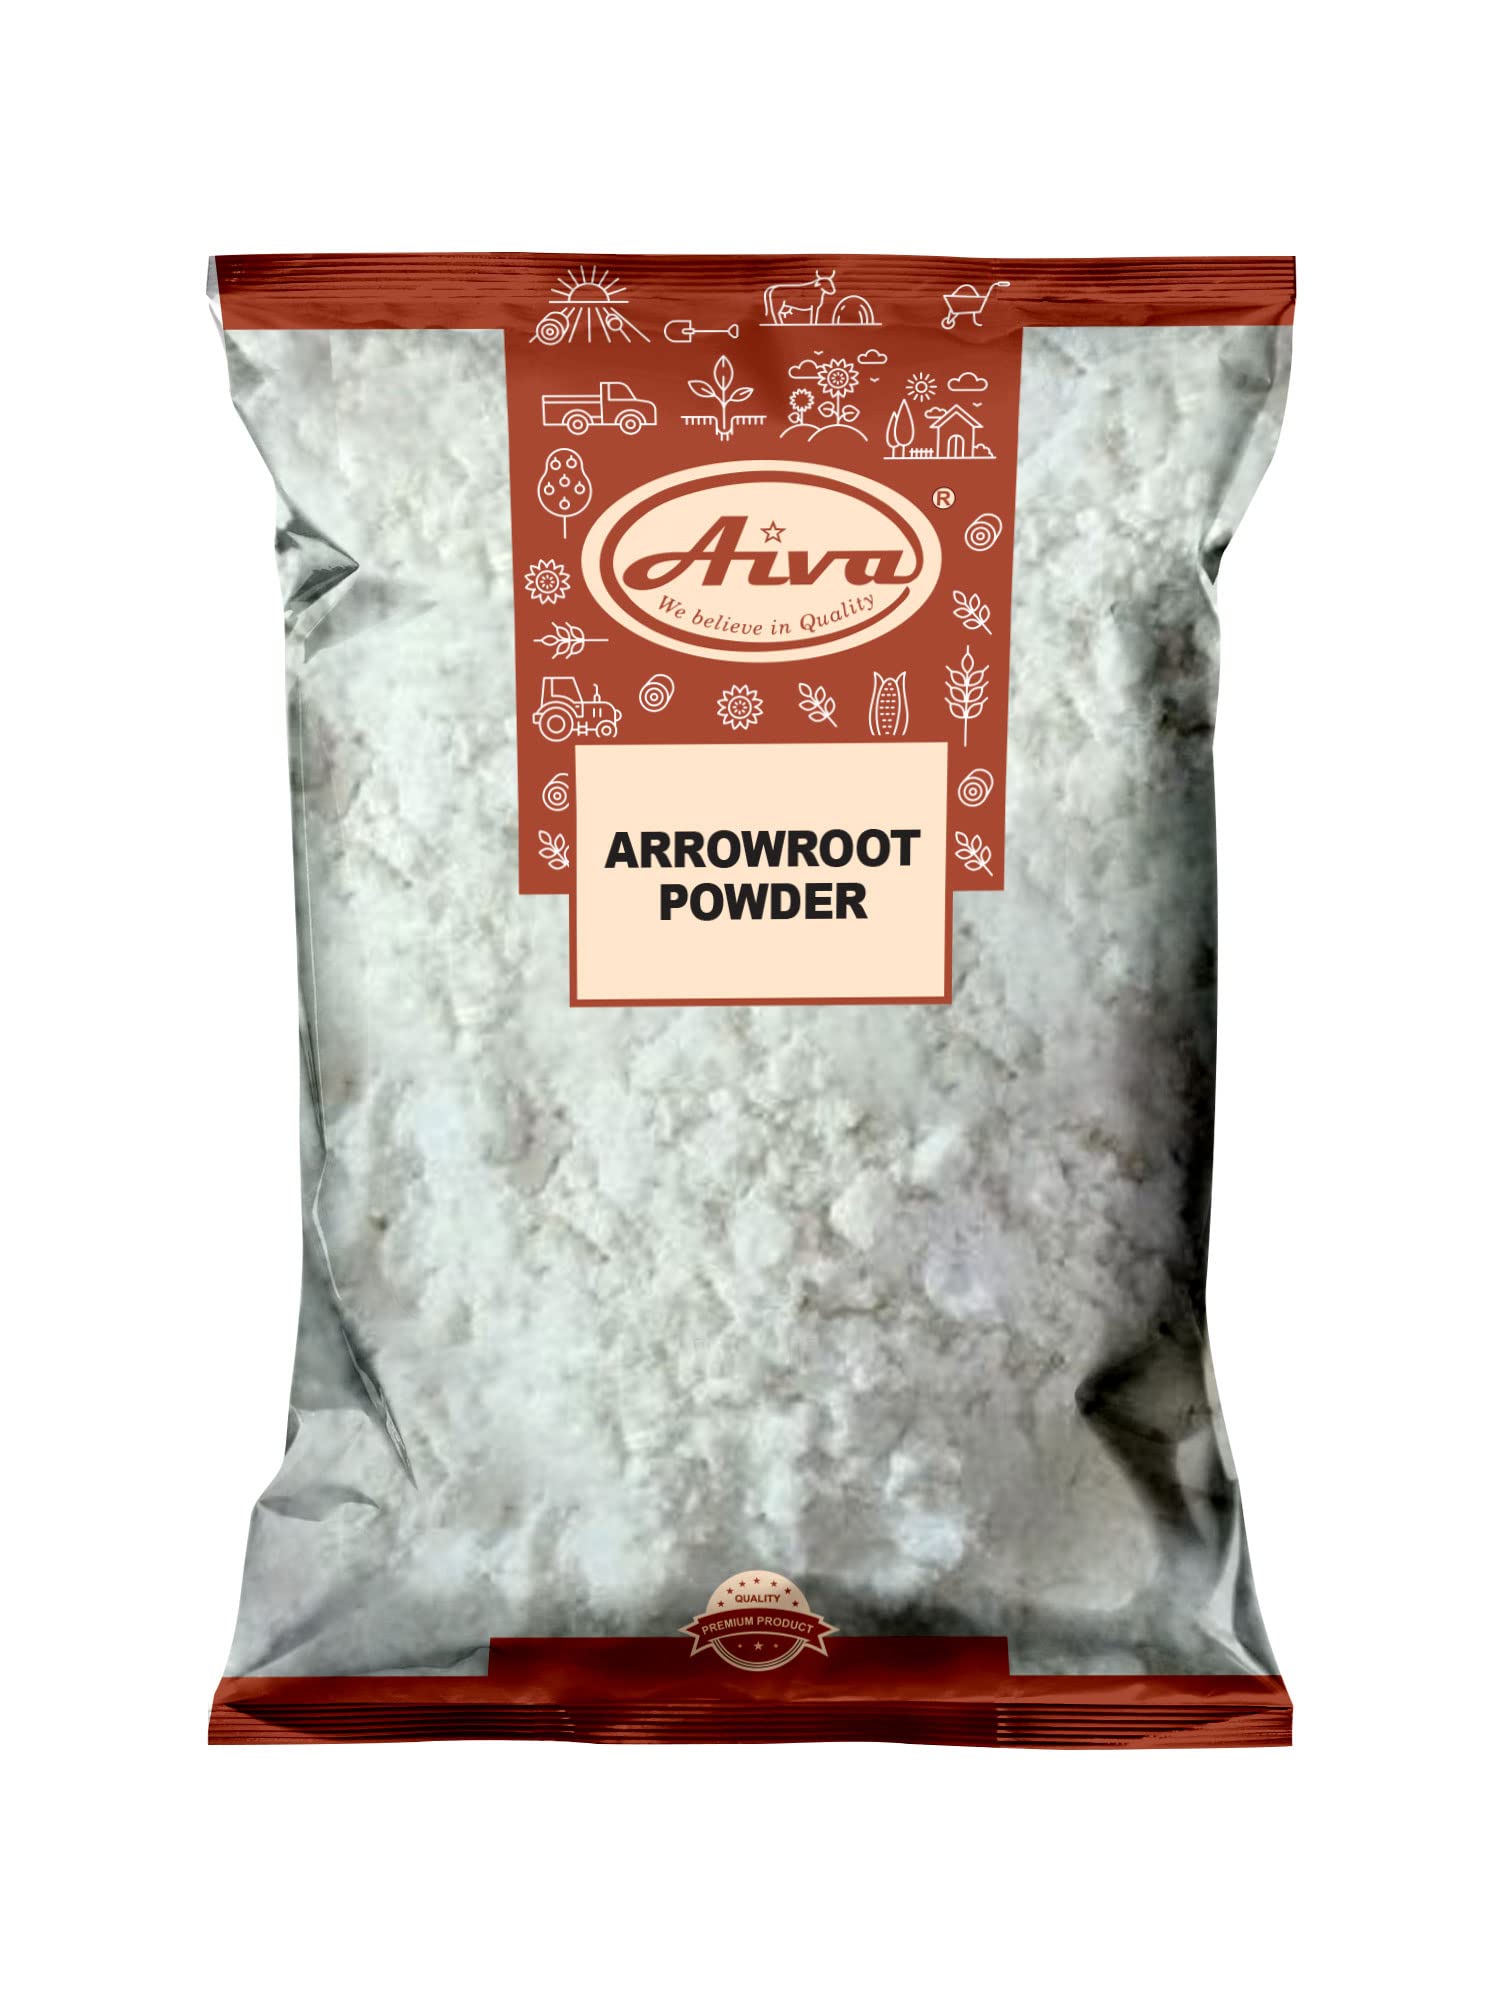 It's Just - Arrowroot Powder, Natural Thickener, Gluten-Free, Dairy-Free,  Non-GMO, Cornstarch Substitute